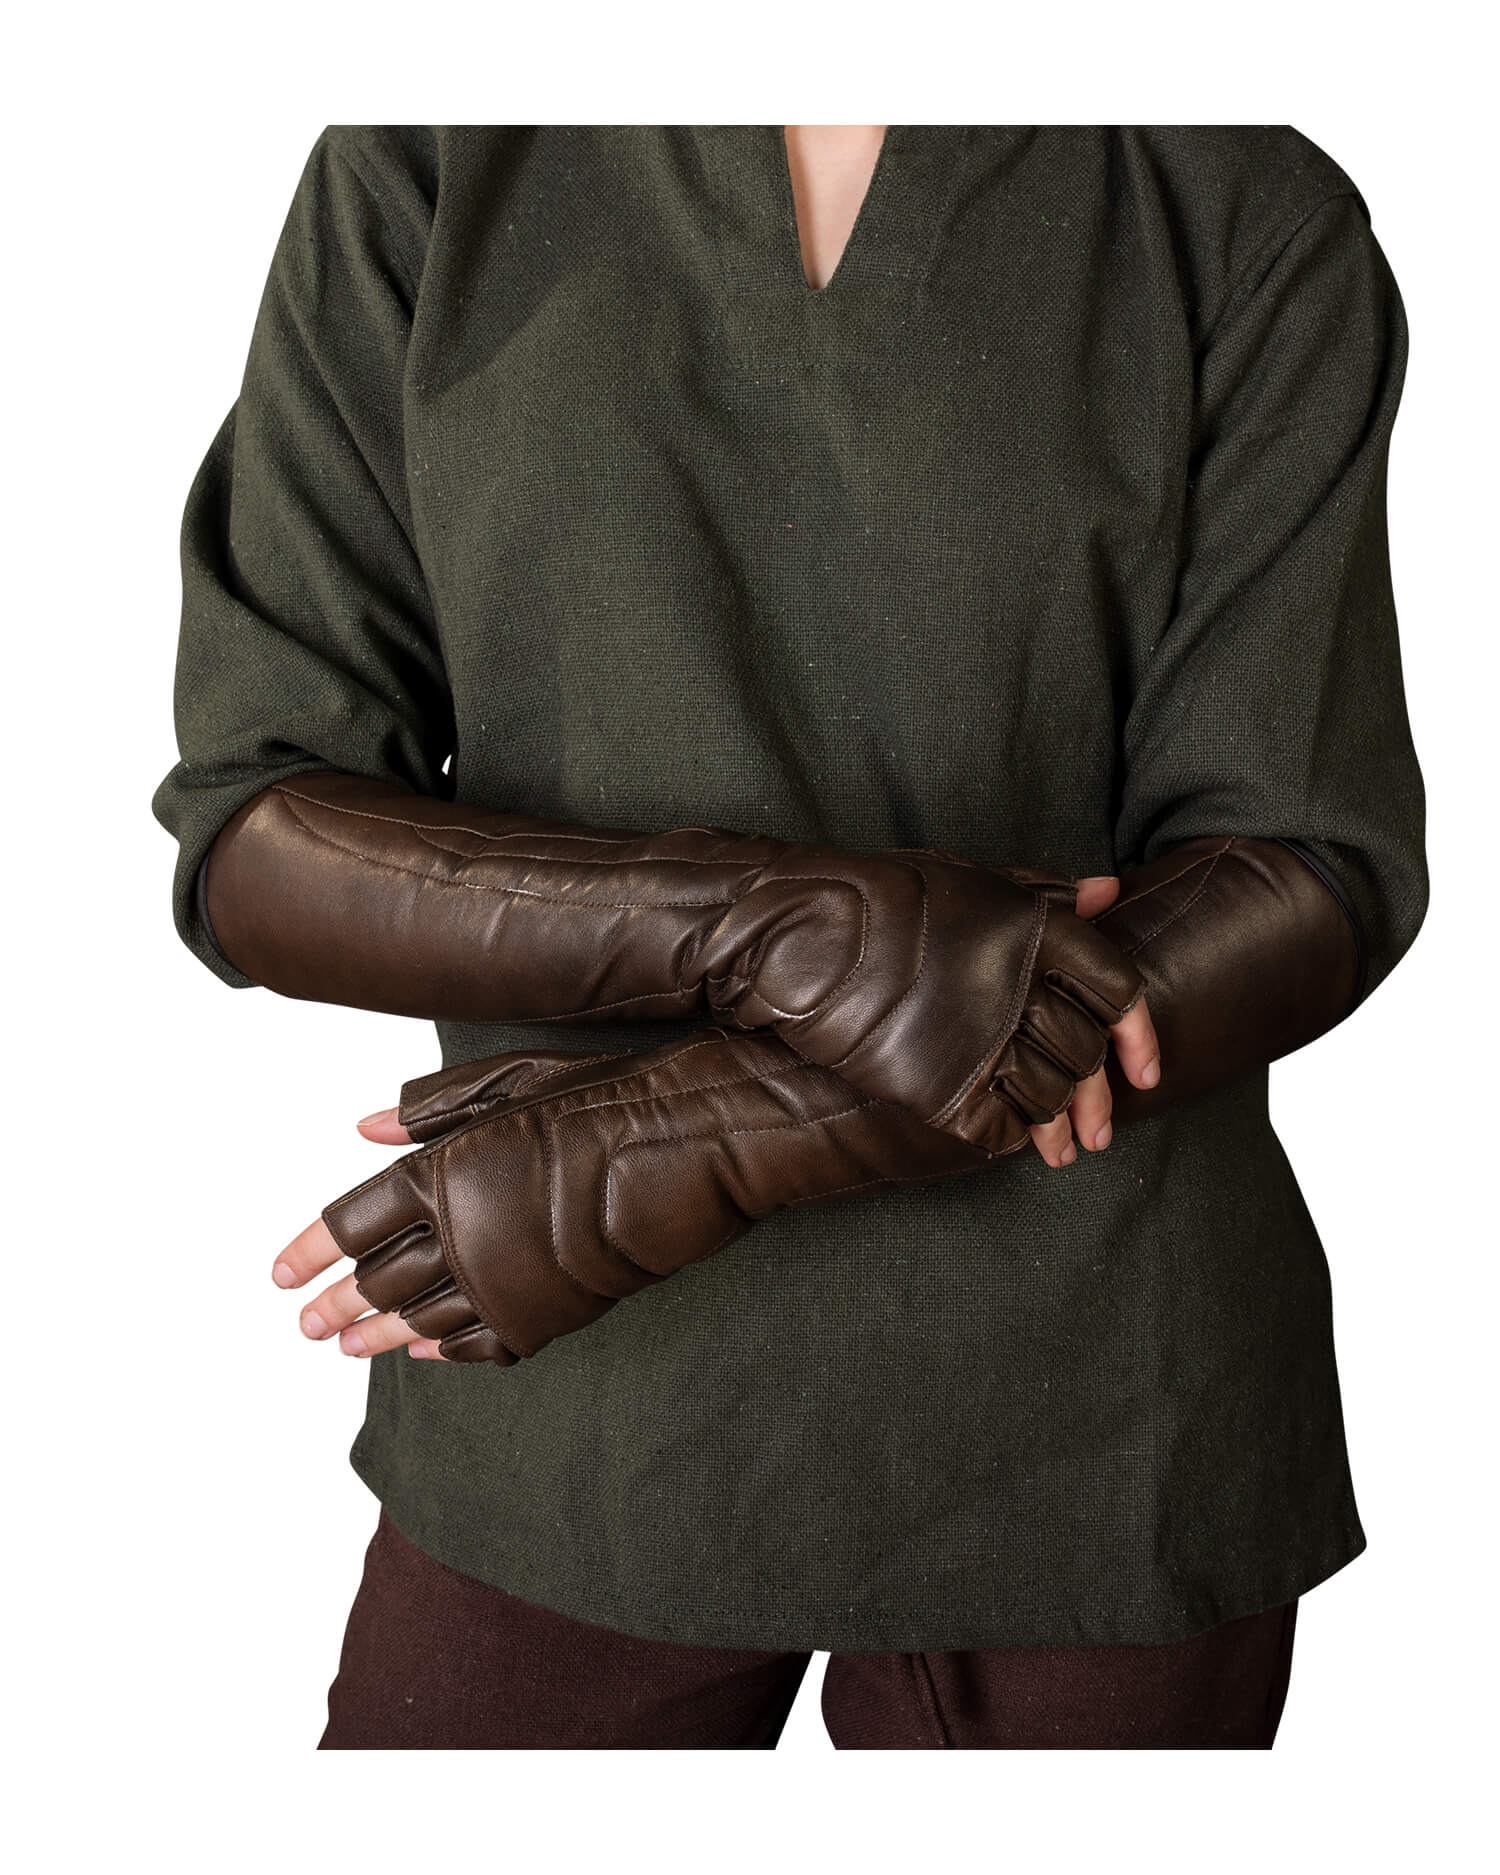 Gillian Handschuhe braun S